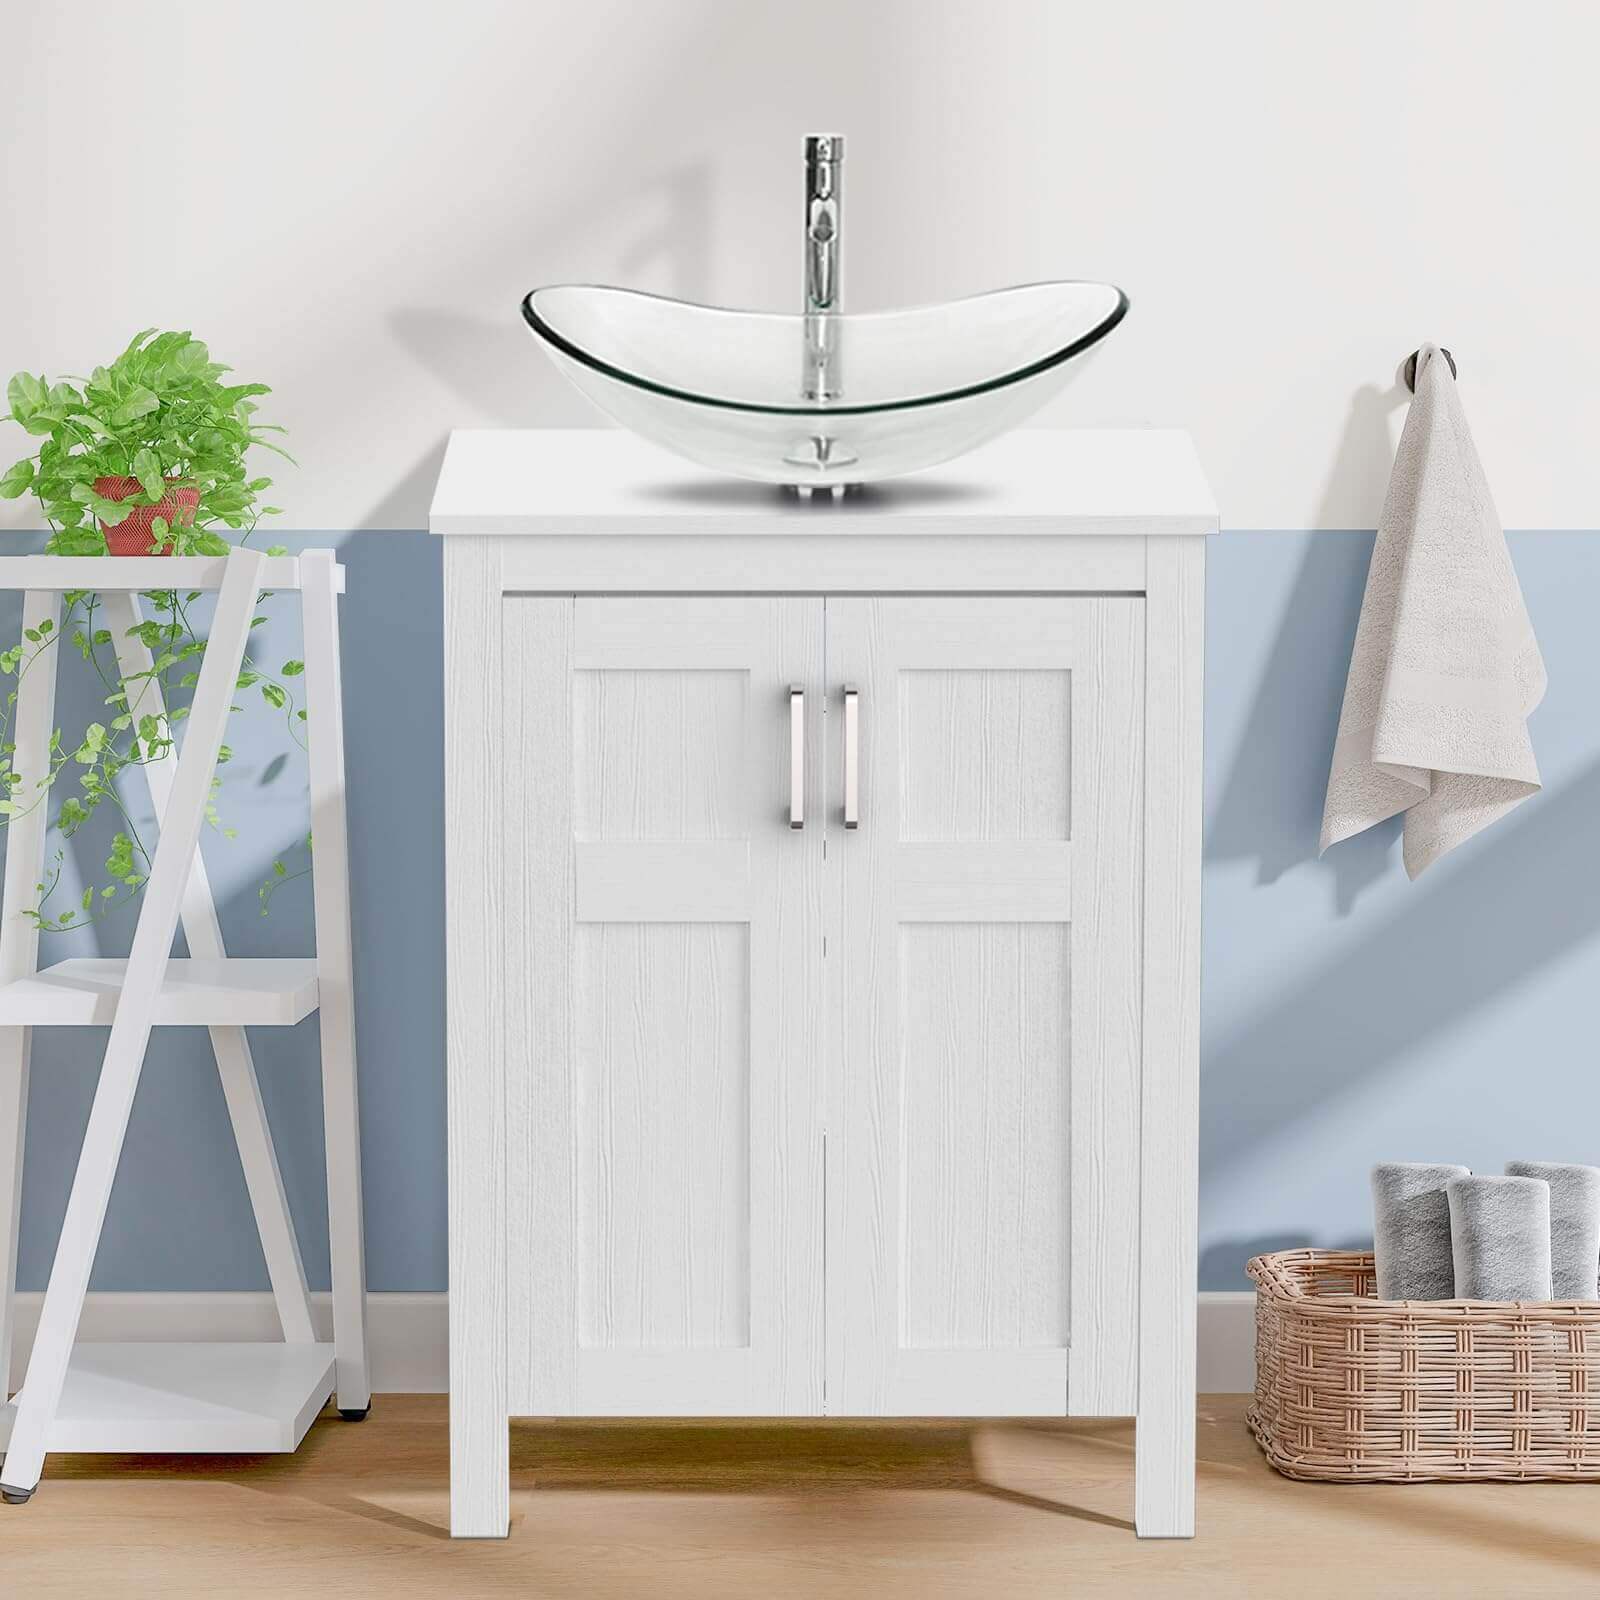 Elecwish White Bathroom Vanity and Clear Boat Sink Set HW1120-WH display scene